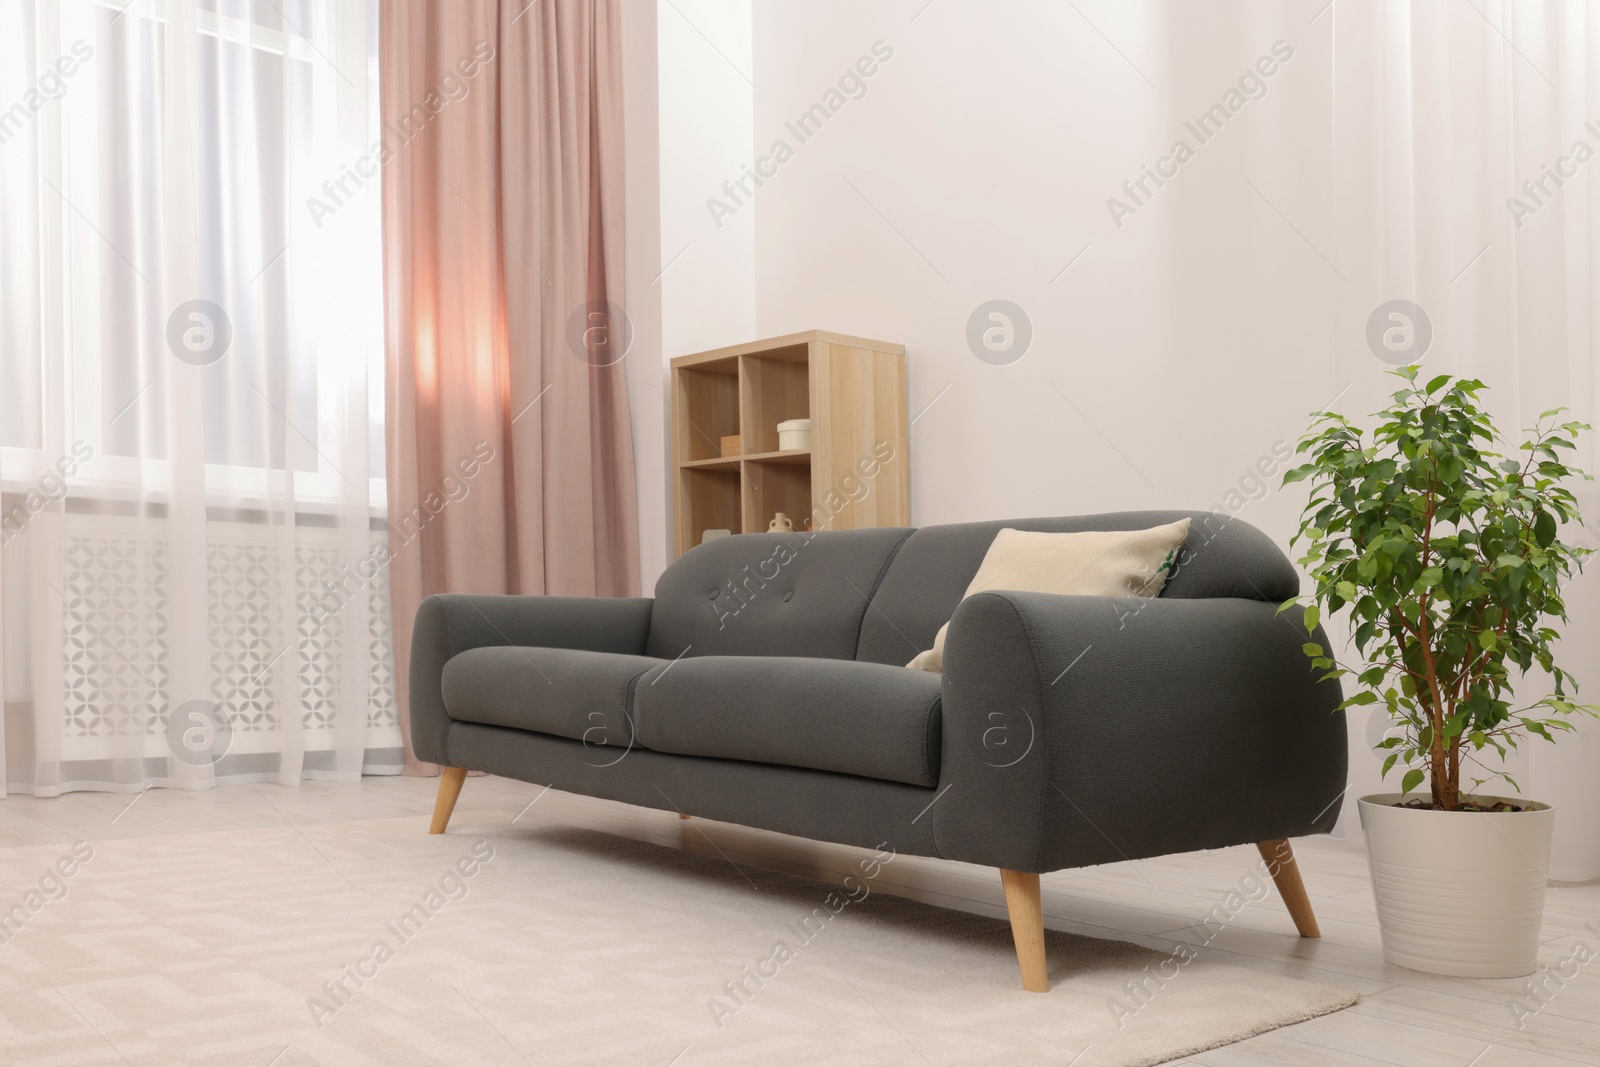 Photo of Stylish sofa and houseplant in room. Interior design